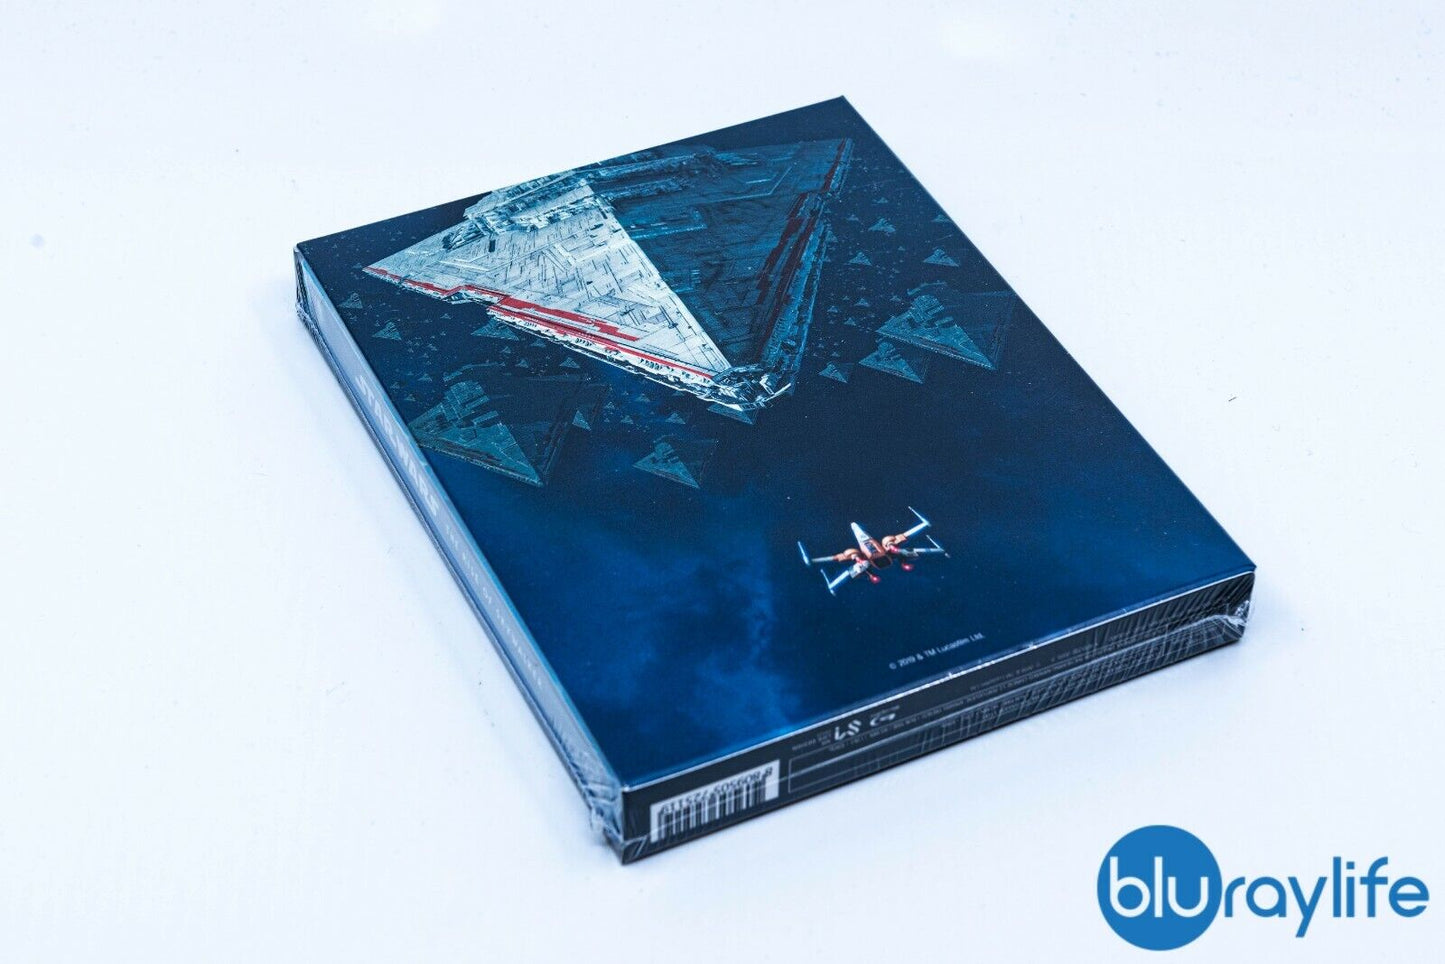 Star Wars: The Rise Of Skywalker 4K+2D Blu-ray Steelbook SM Life Design Exclusive Full Slip